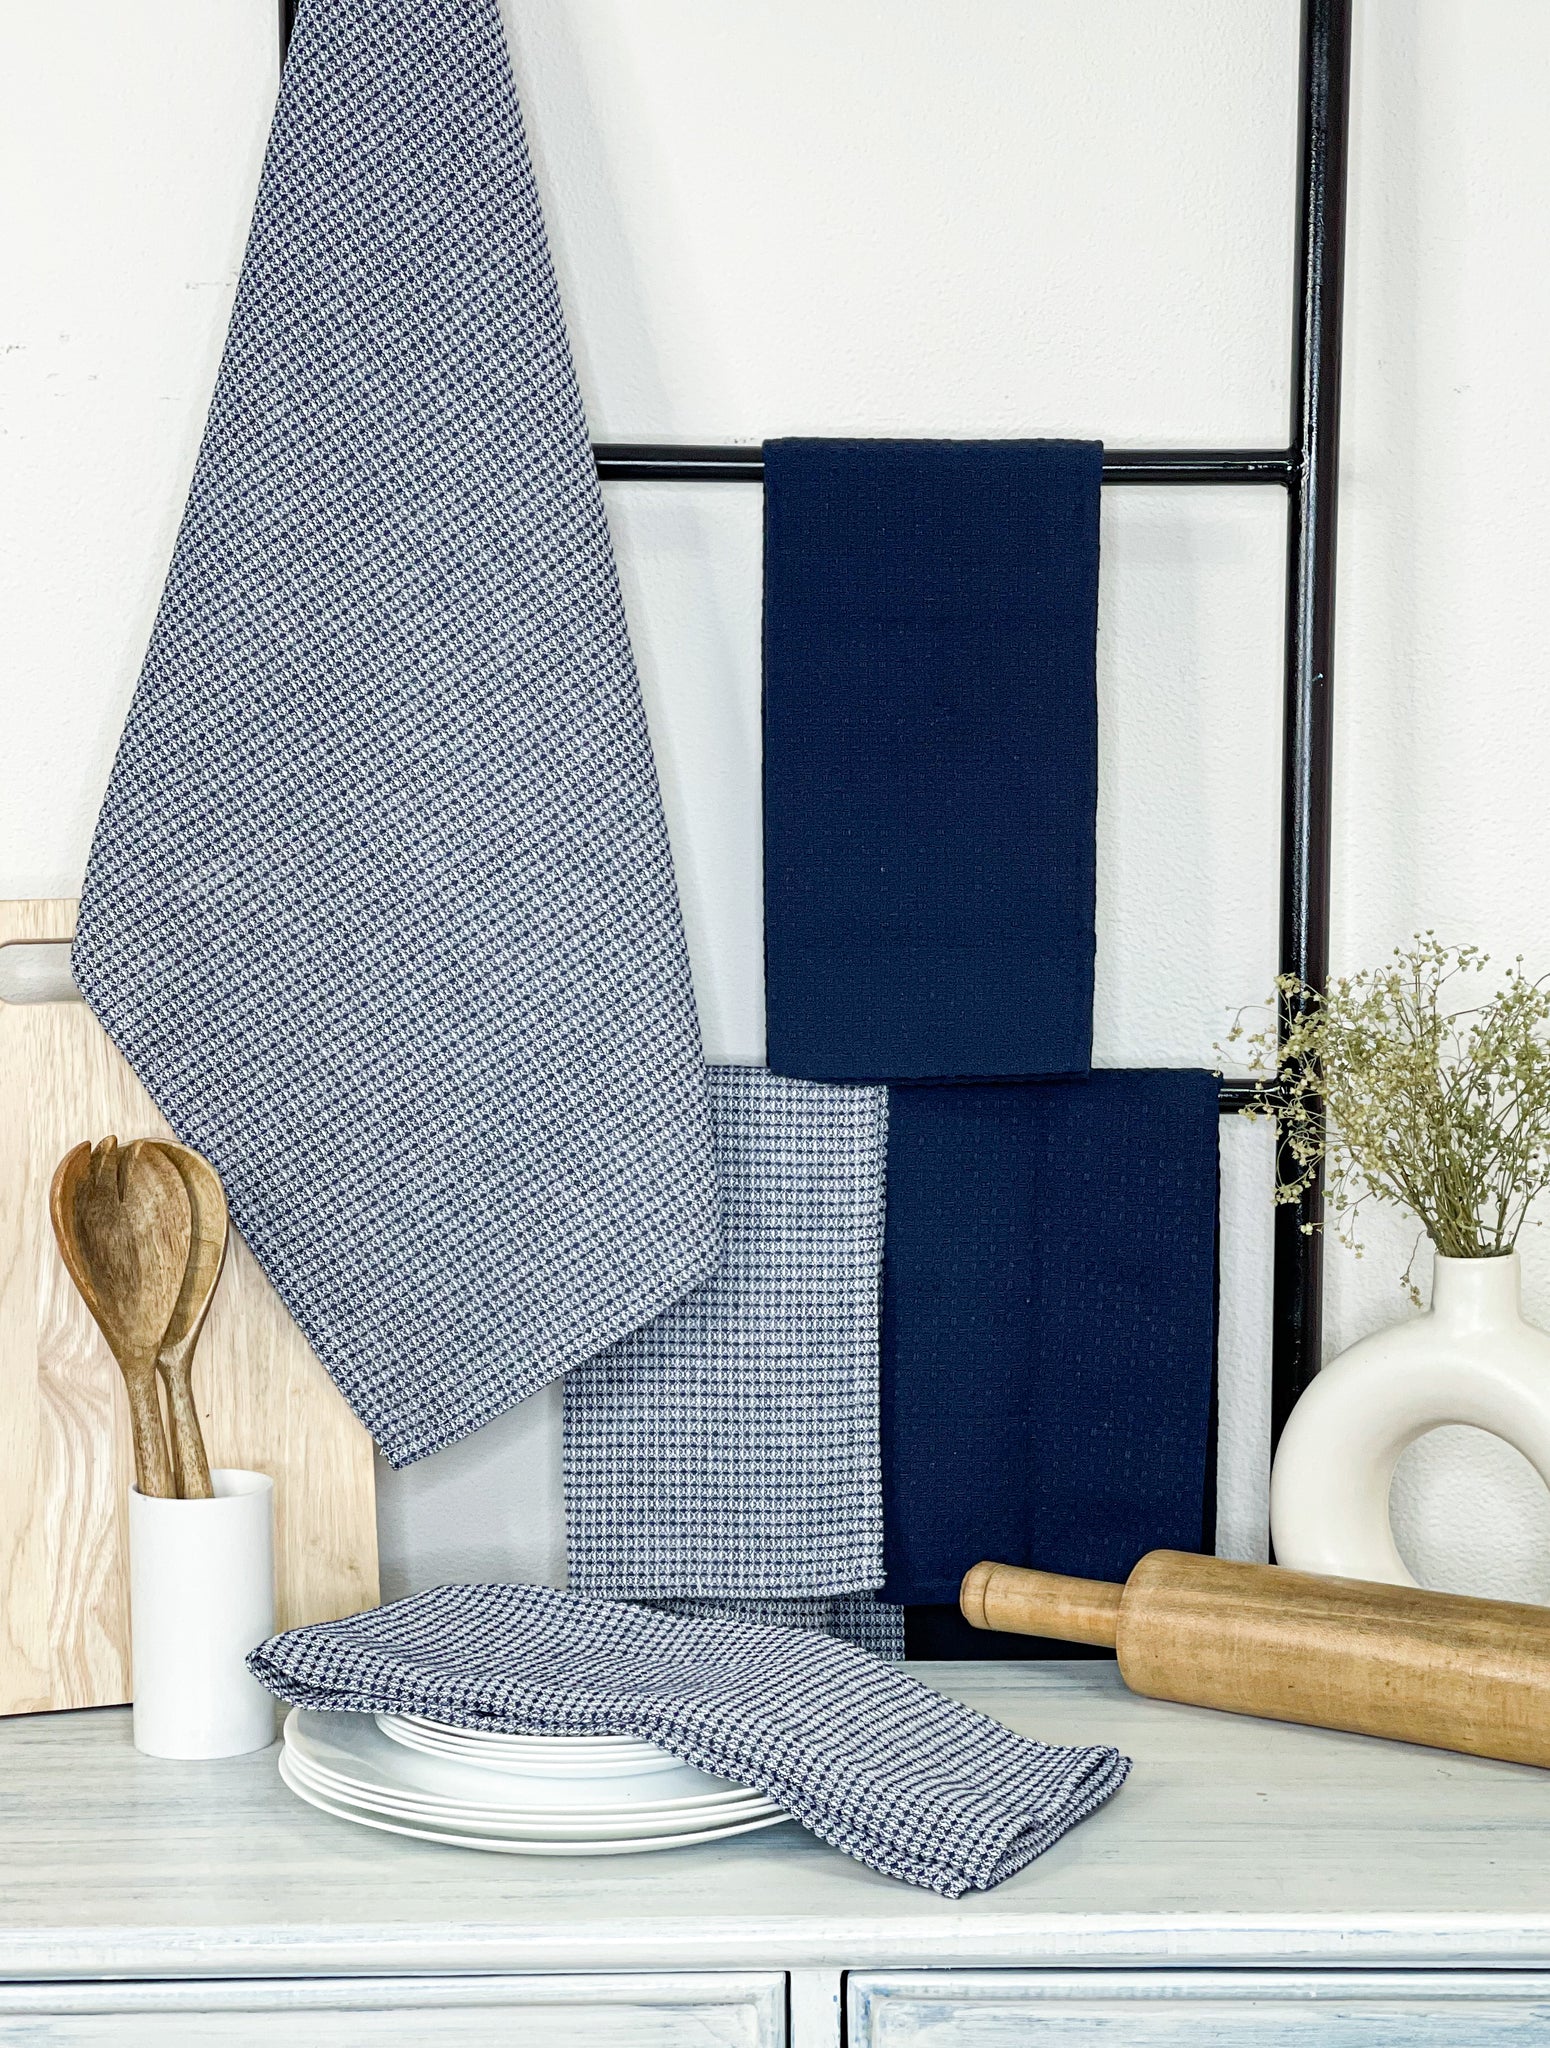 WAFFLE KITCHEN TOWELS SET OF 6, Blue, 18''x28'' – Chardin Home